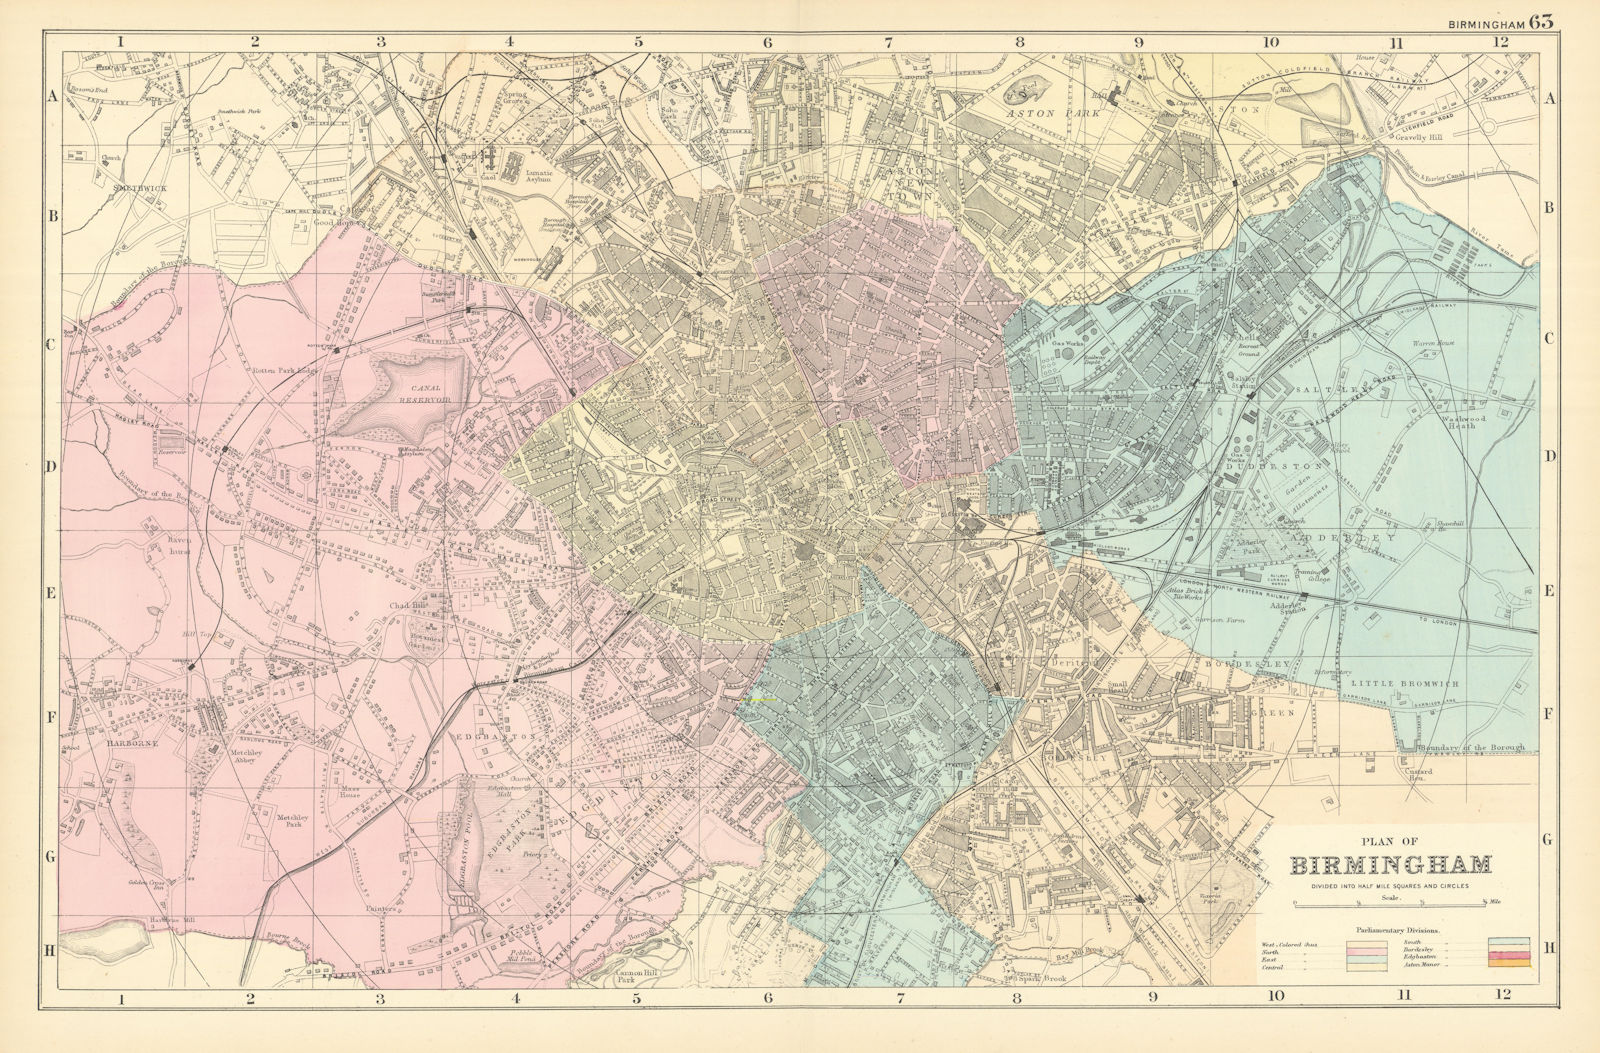 BIRMINGHAM Aston Edgbaston Bordesley town city plan GW BACON 1891 old map